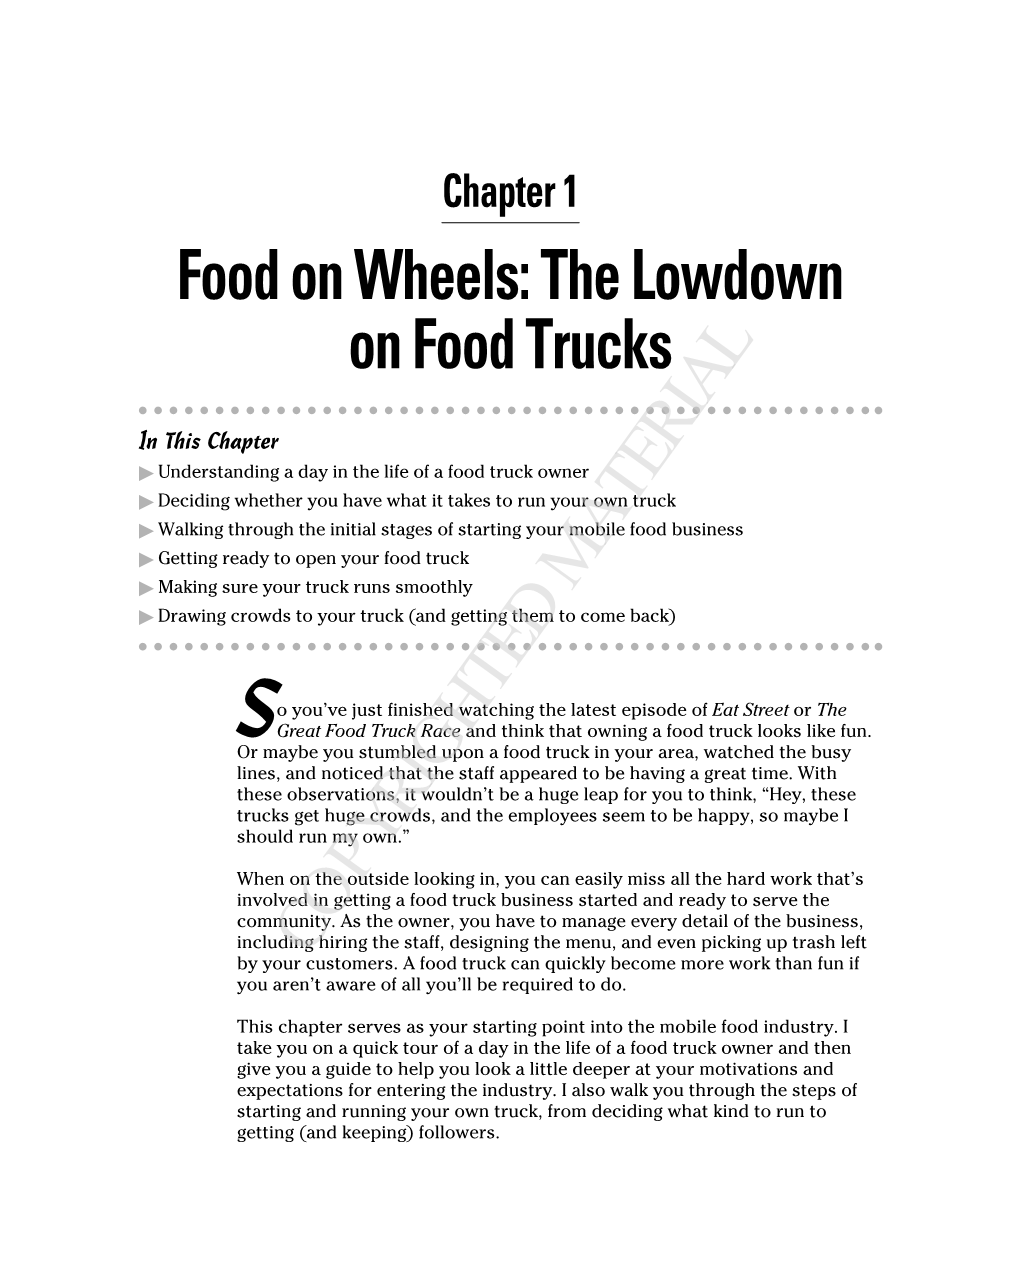 Food on Wheels: the Lowdown on Food Trucks